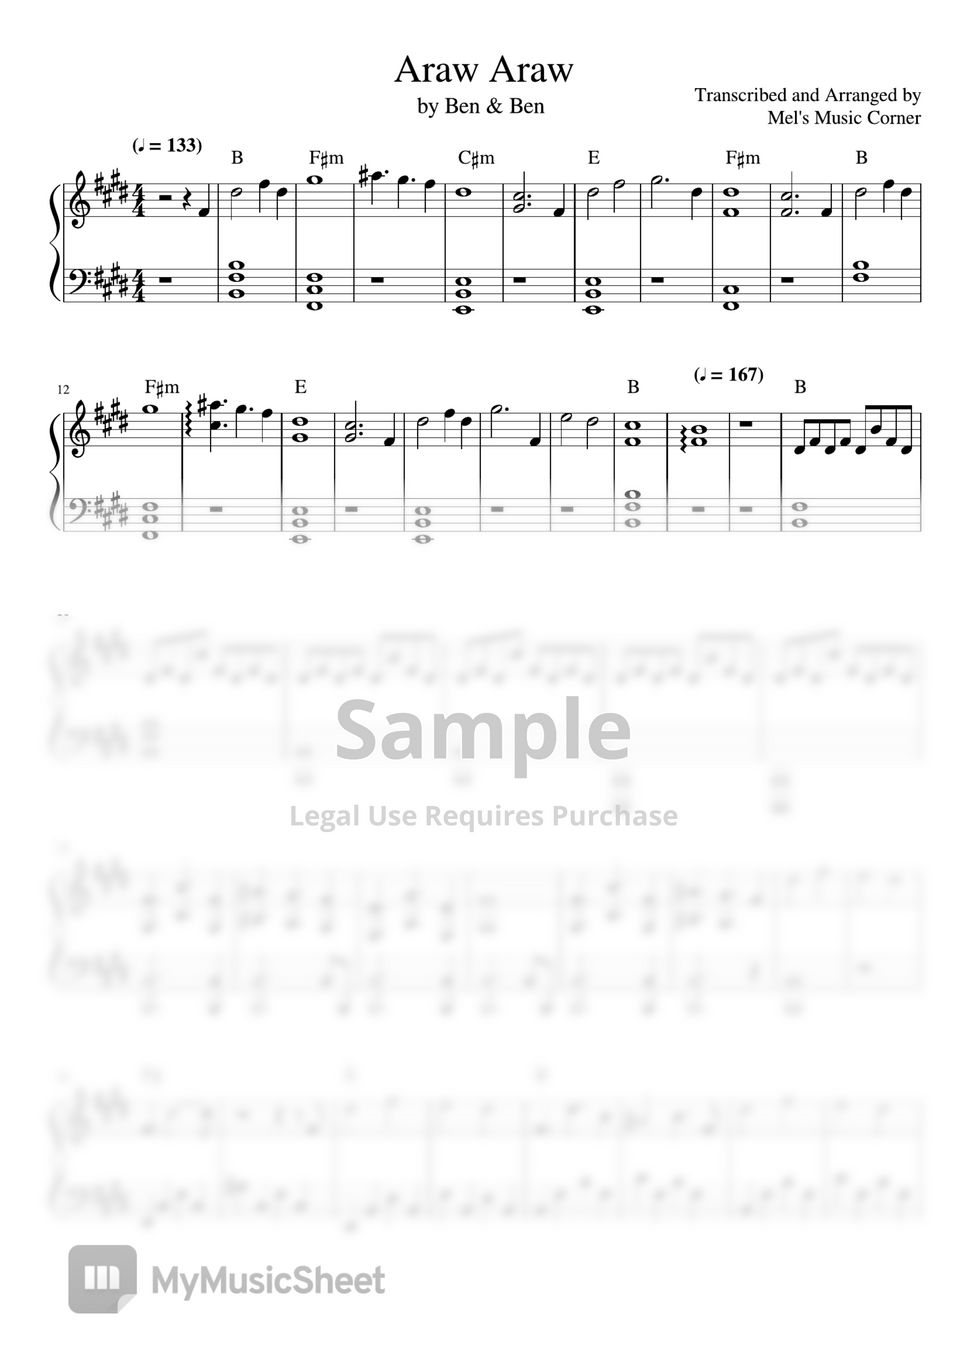 Ben&Ben - Araw-Araw (piano sheet music) by Mel's Music Corner